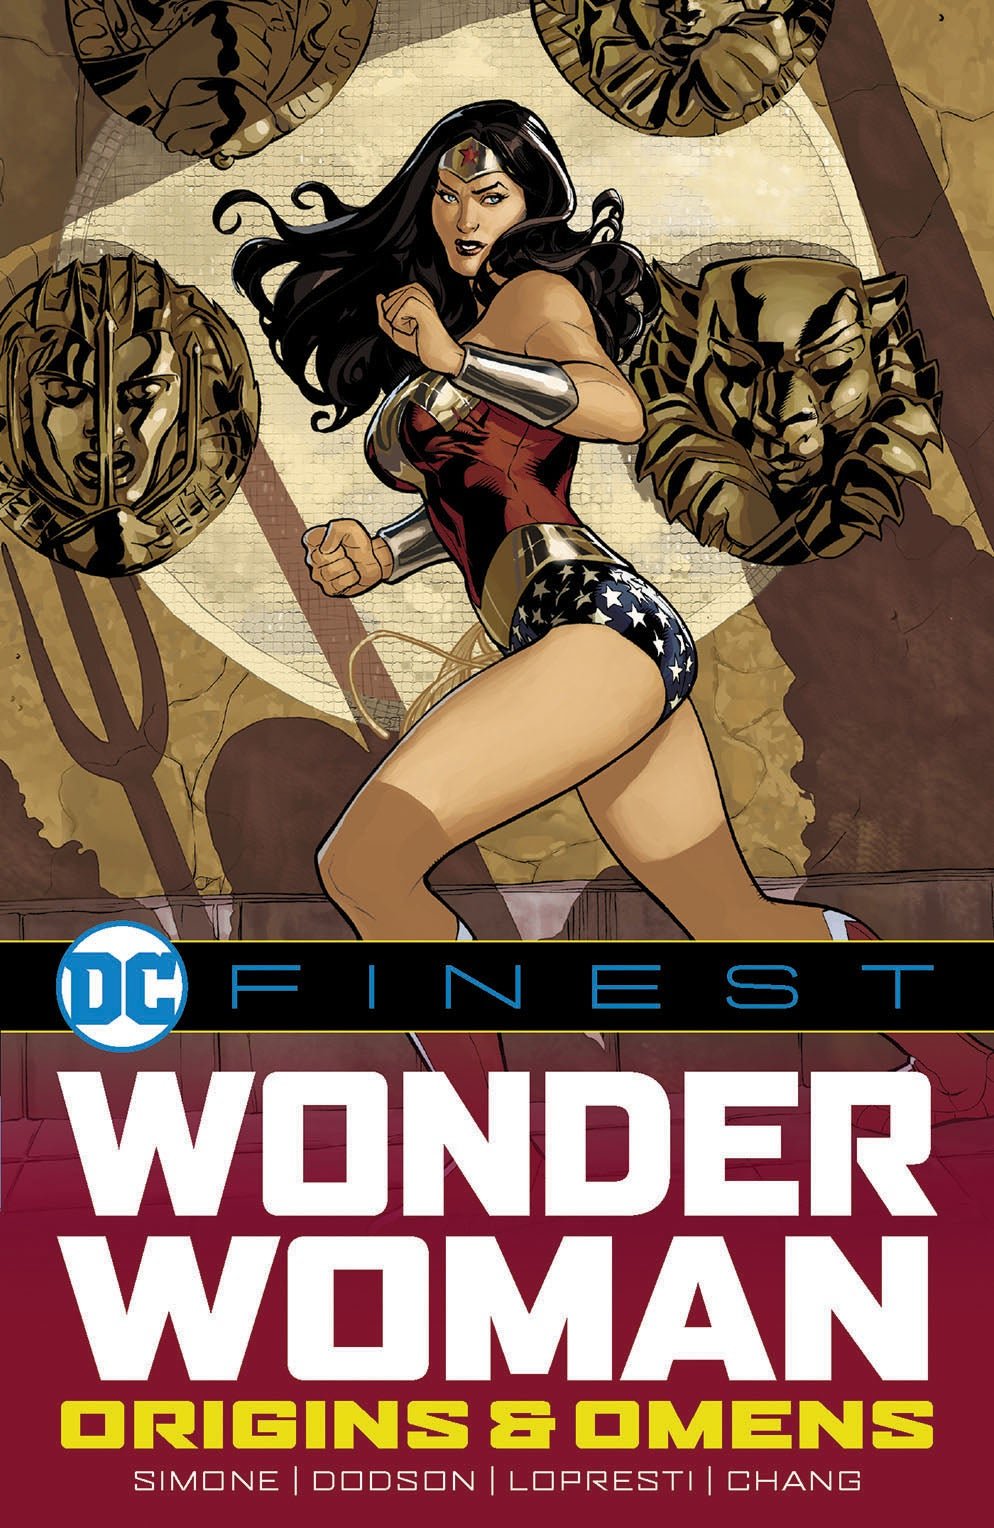 DC Finest: Wonder Woman - Origins and Omens